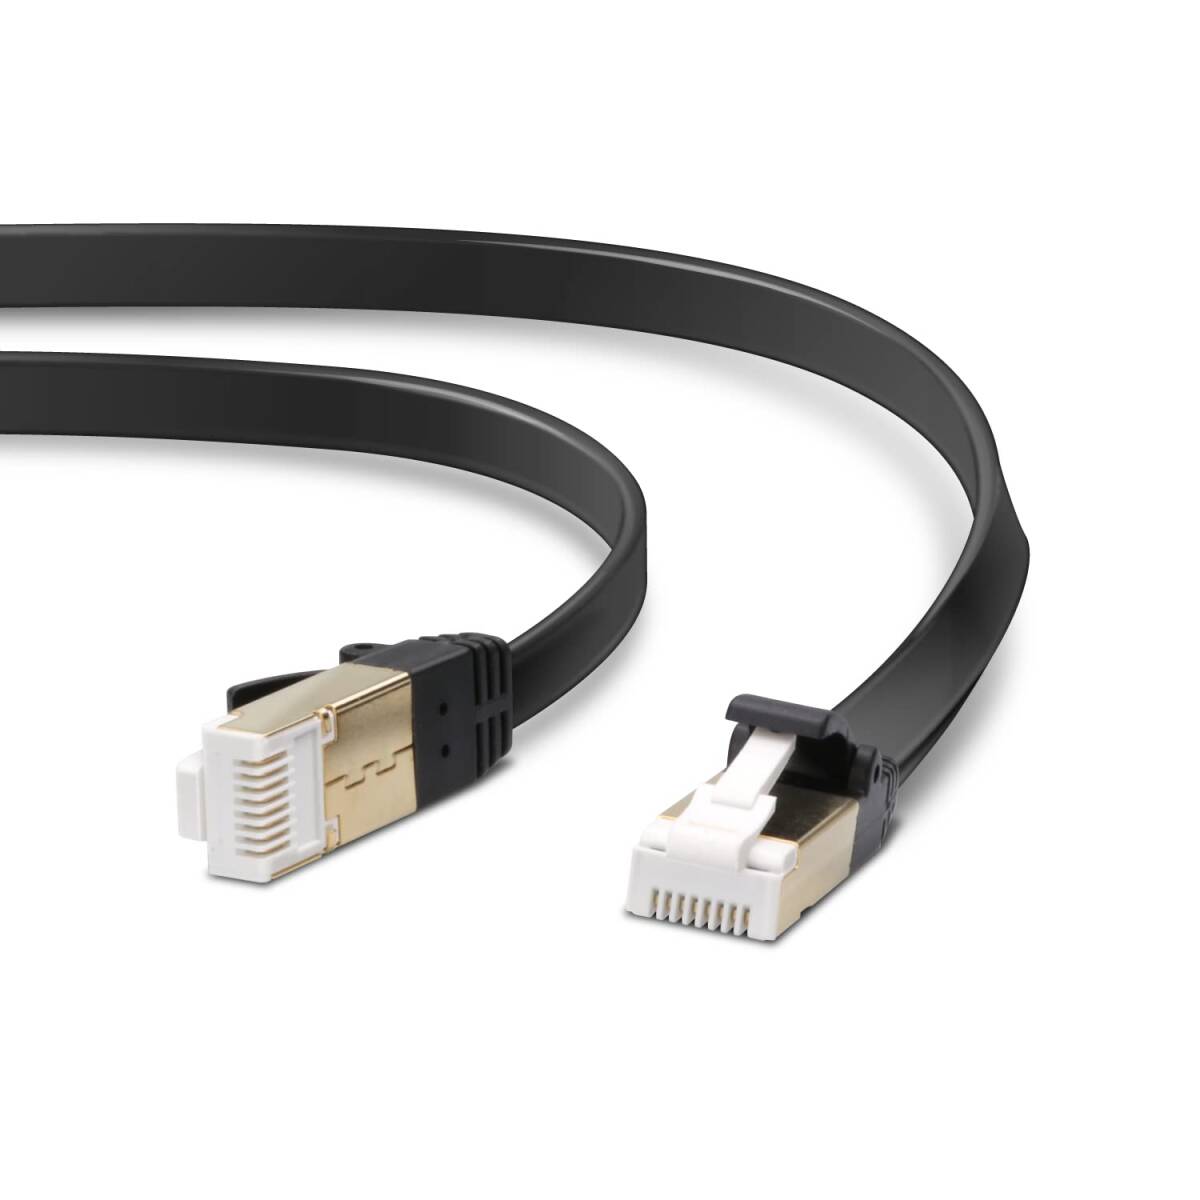  Elecom LAN cable Cat7 nail breaking prevention Flat 3m black ECLD-TWSFT/BK3